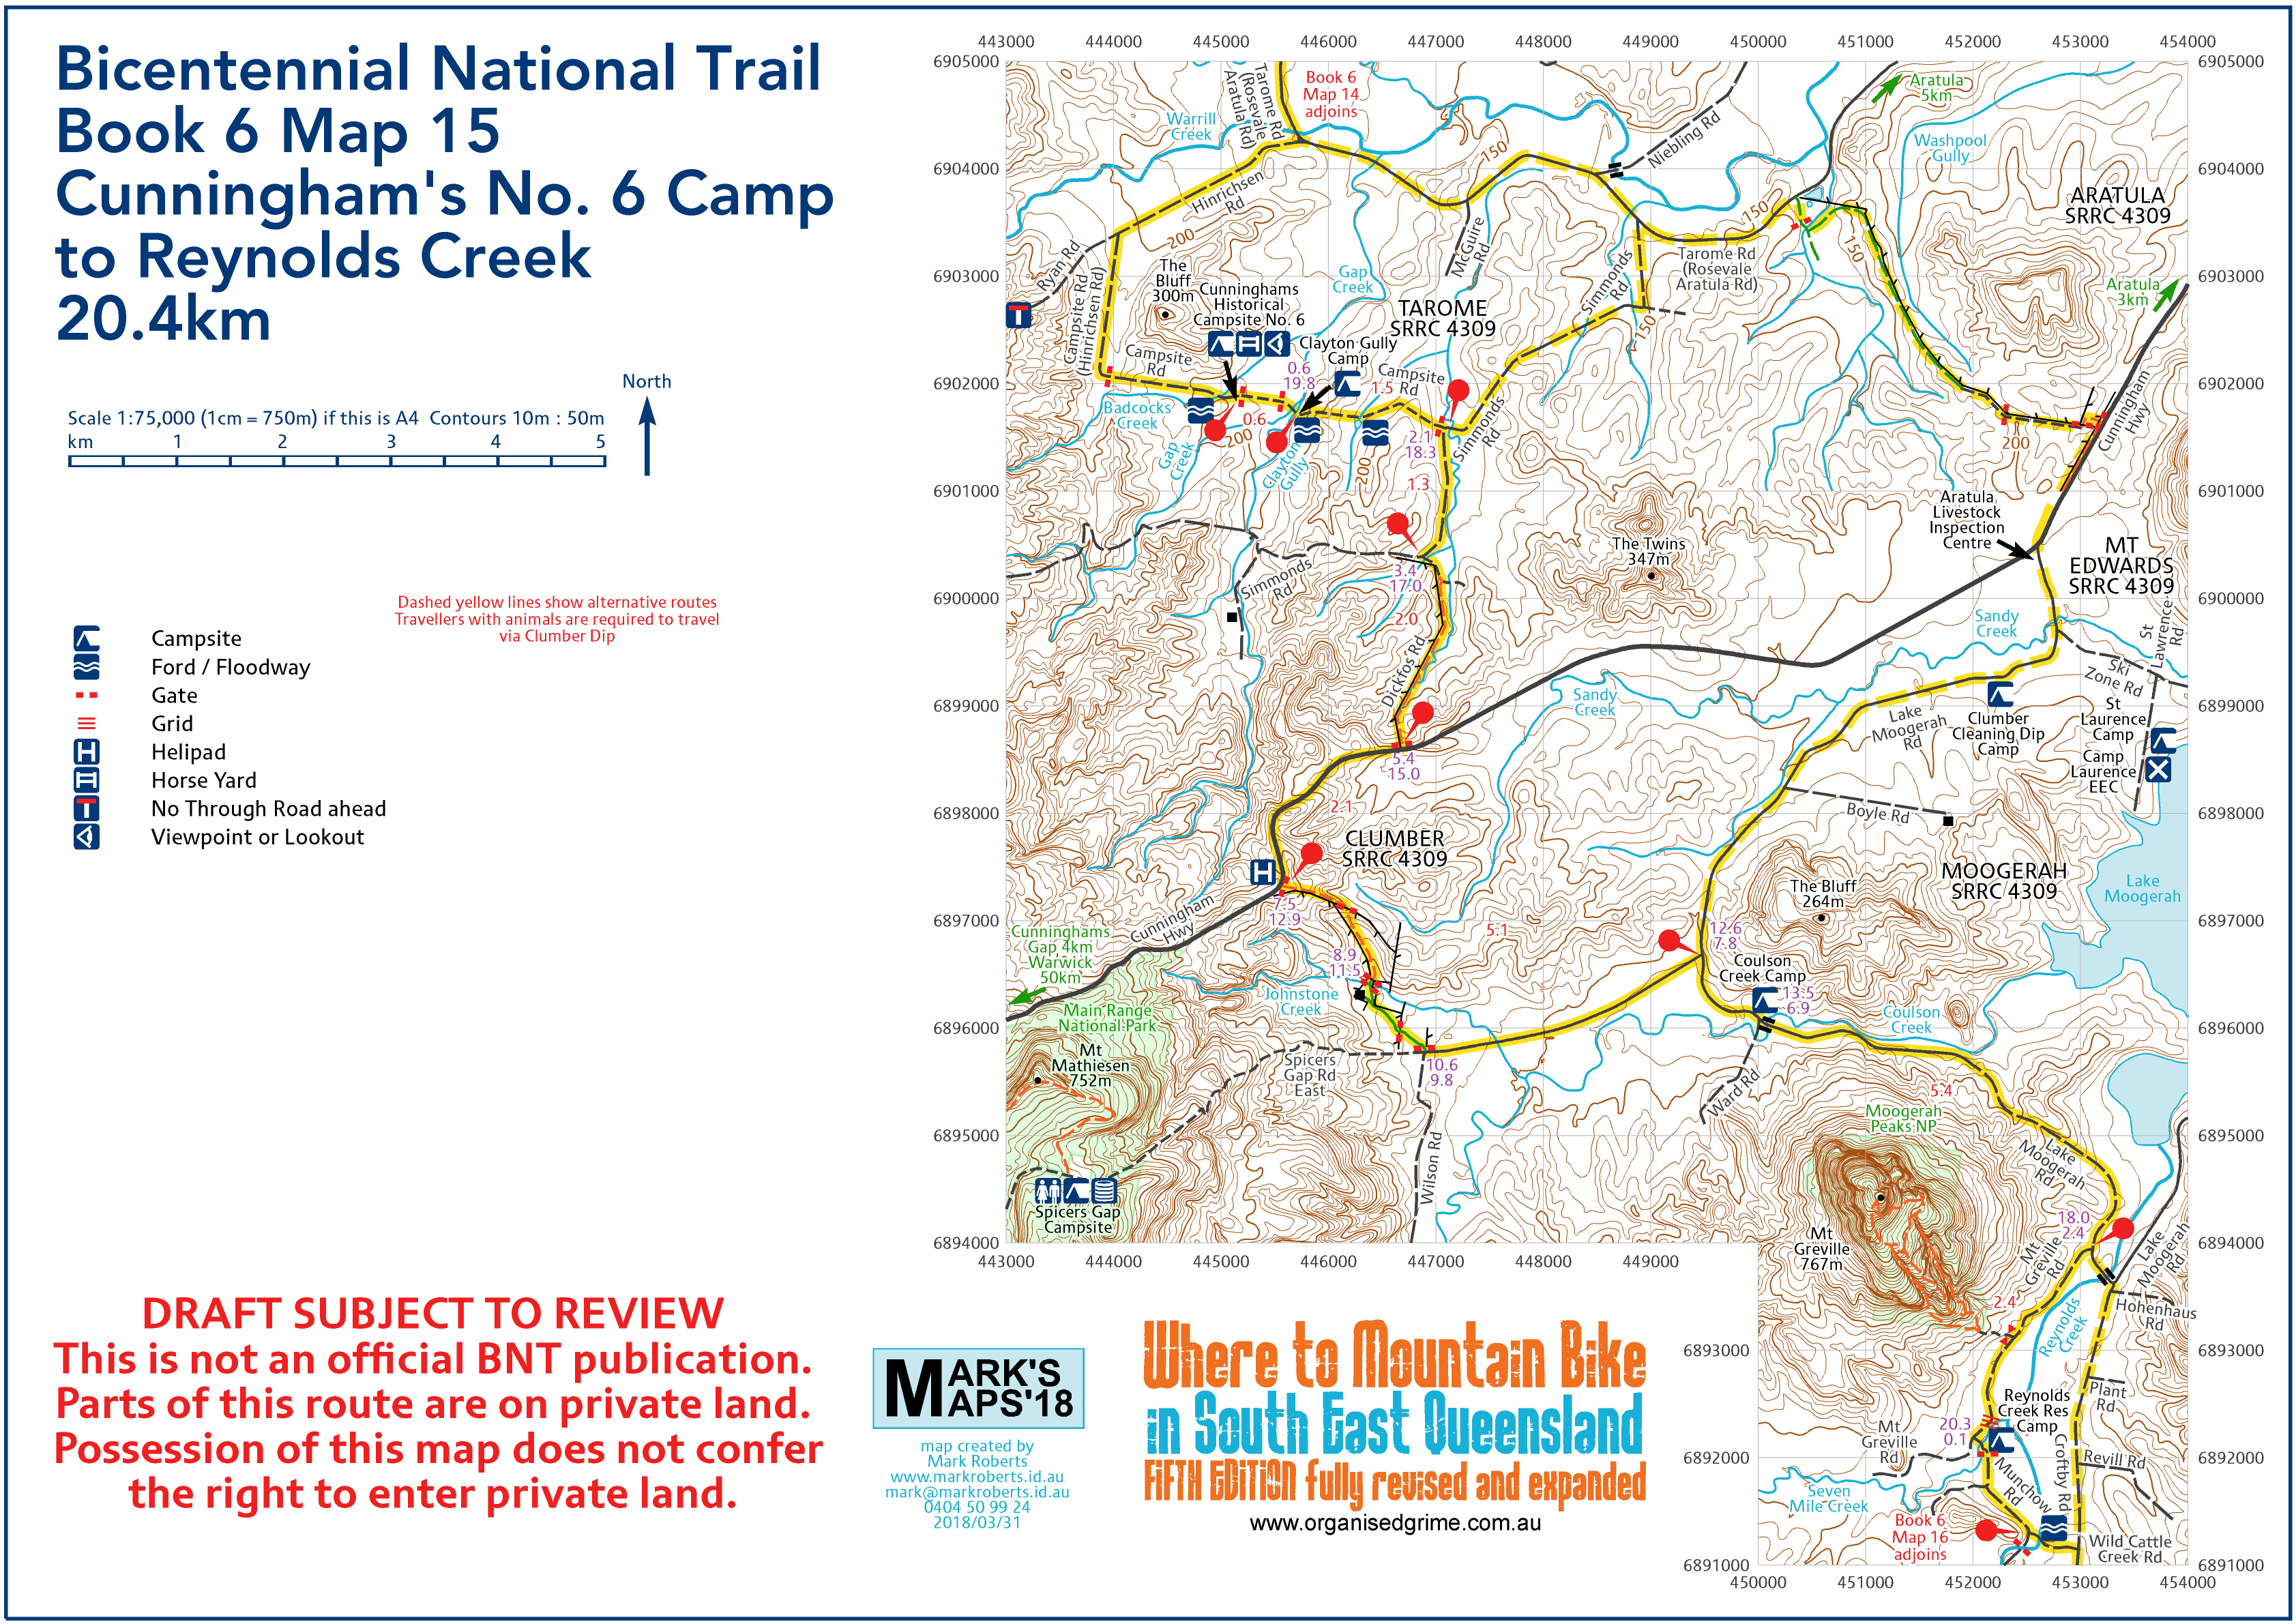 Bicentennial National Trail Book 6 Map 15 Cunningham's No. 6 Camp to Reynolds Creek